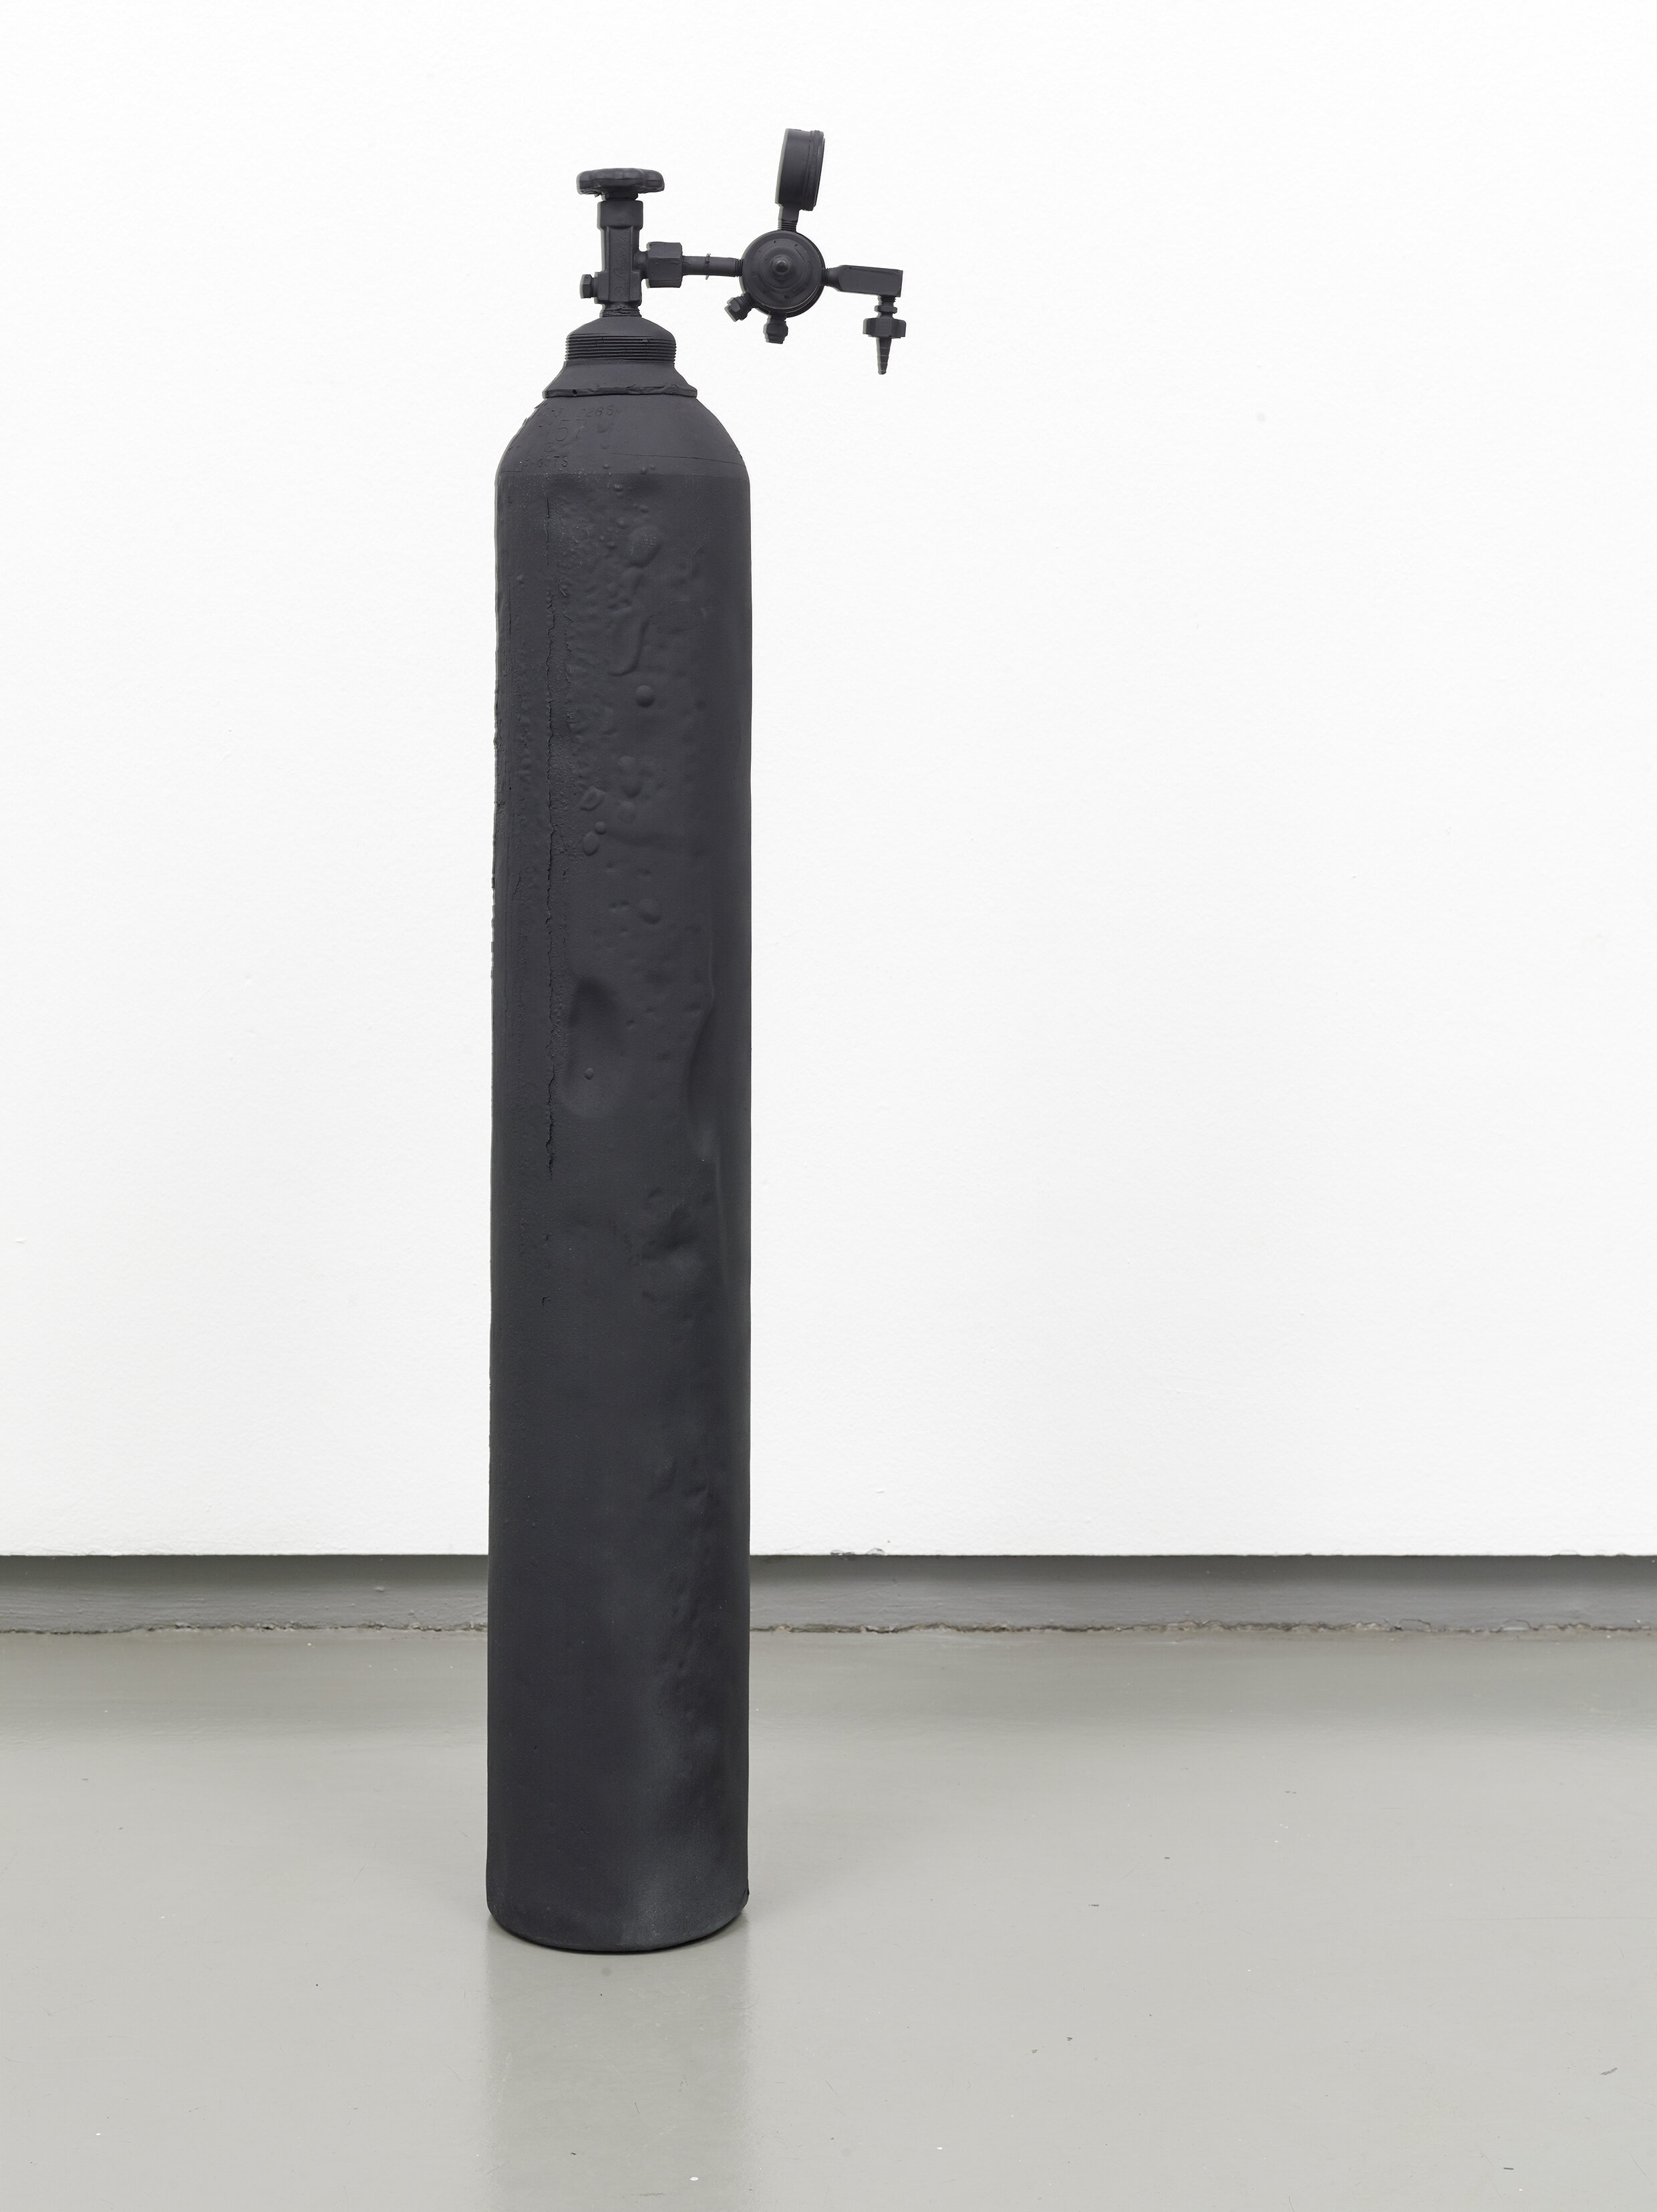  Untitled, 2015, Polyurethane and enamel, 50 x 21 x 7 inches. 